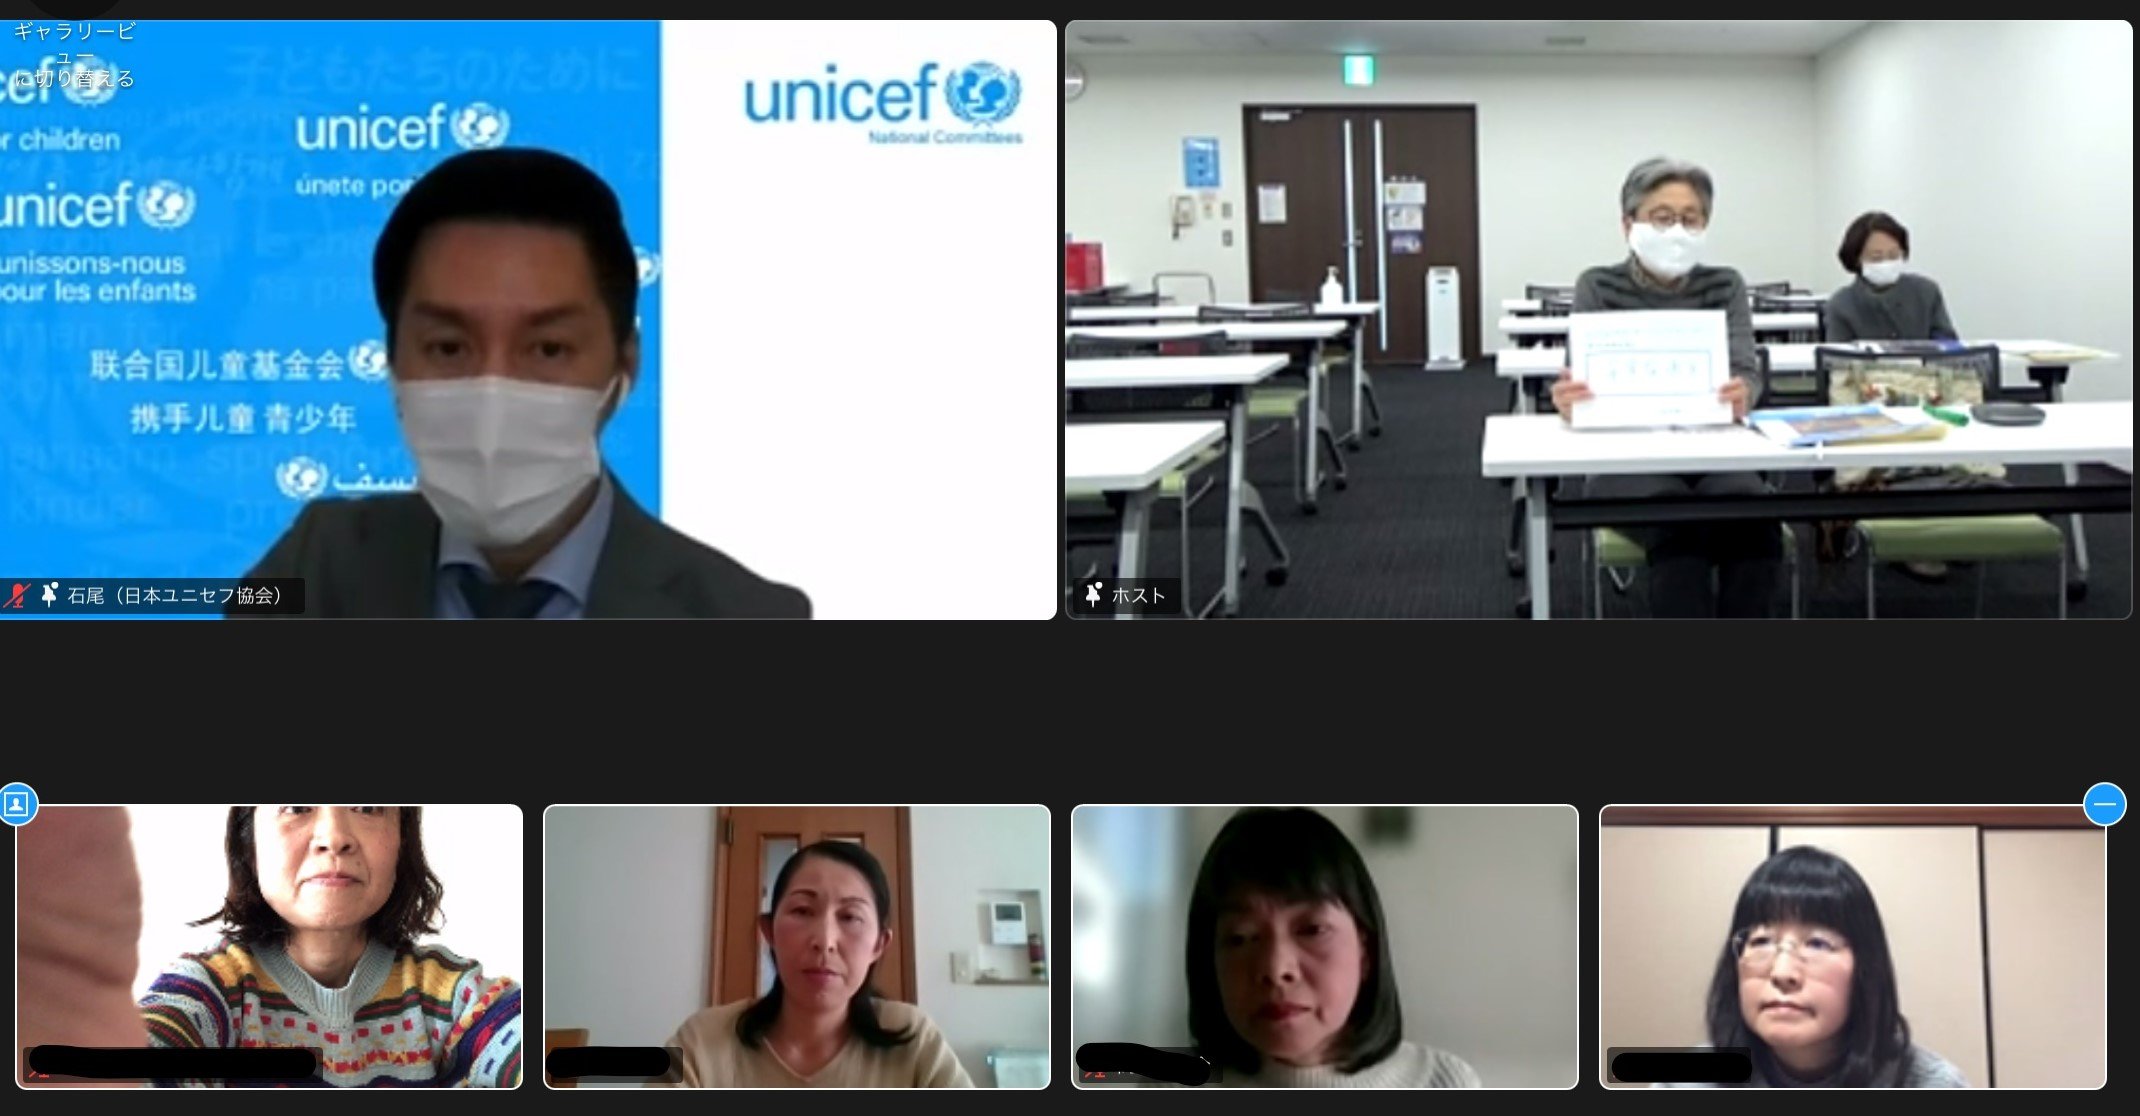 UNICEF Study Session held